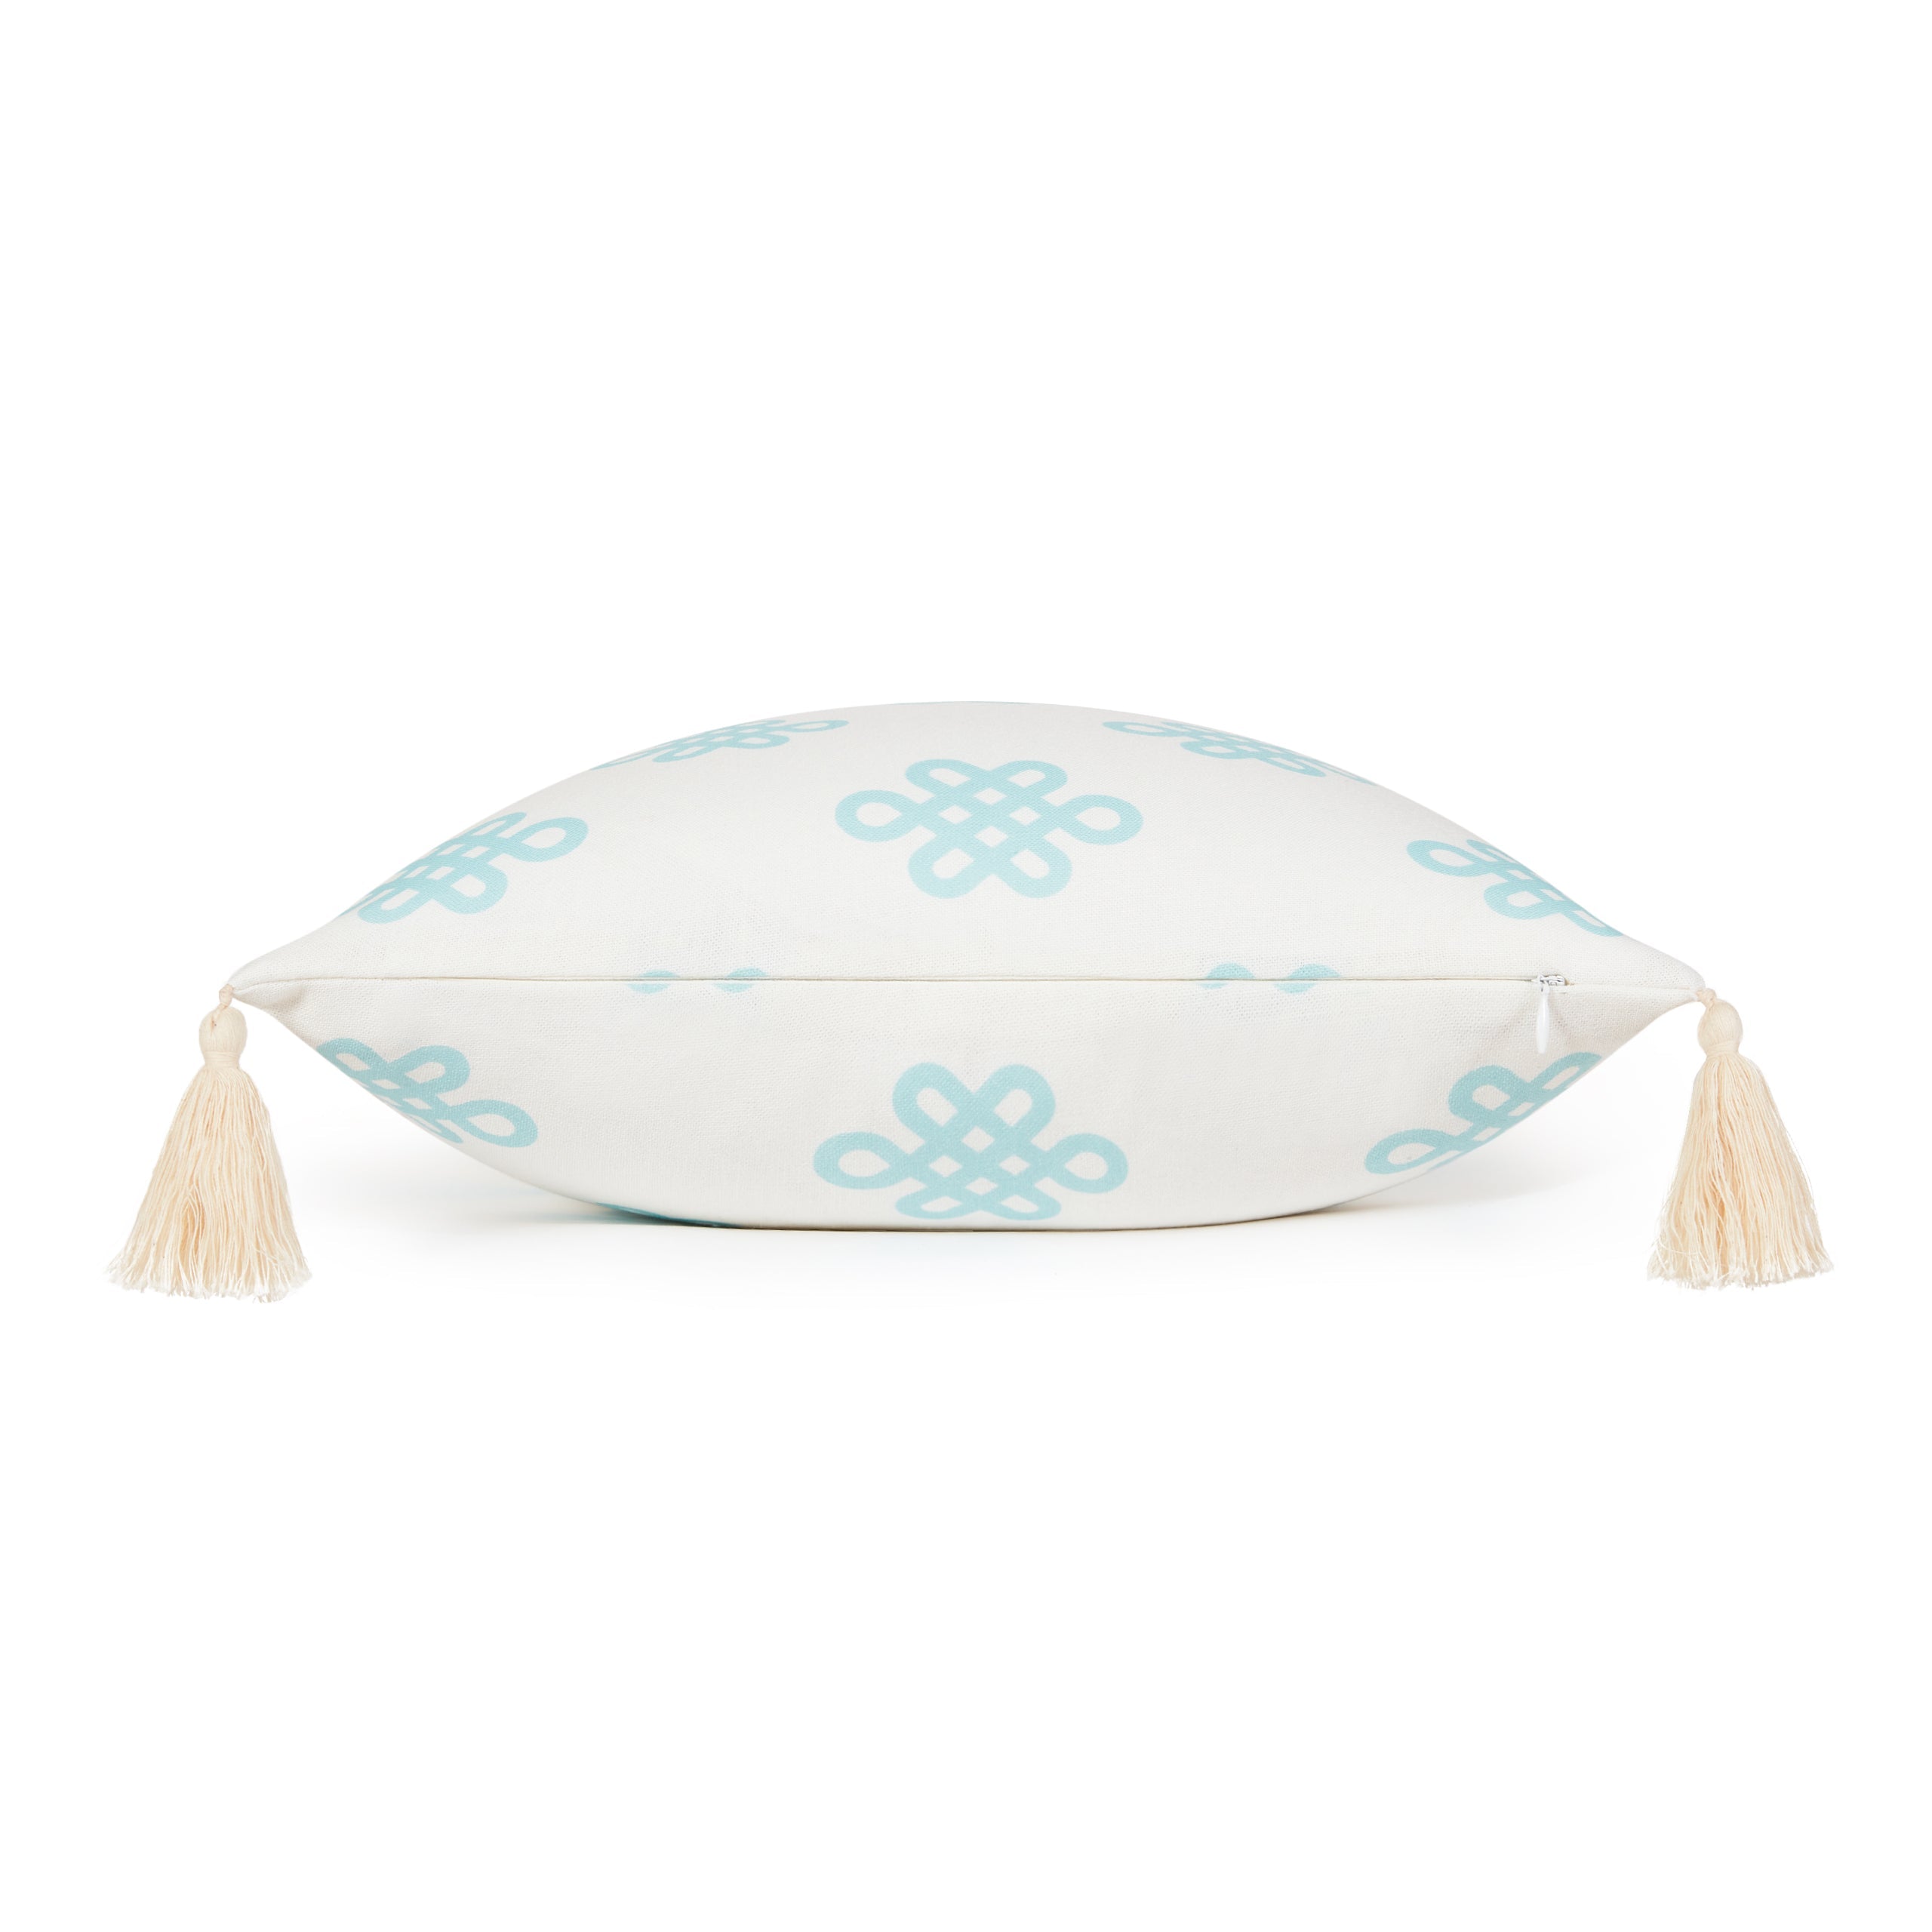 Coastal Boho Indoor Outdoor Pillow Cover, Orient, Knot, Mint, 18"x18"